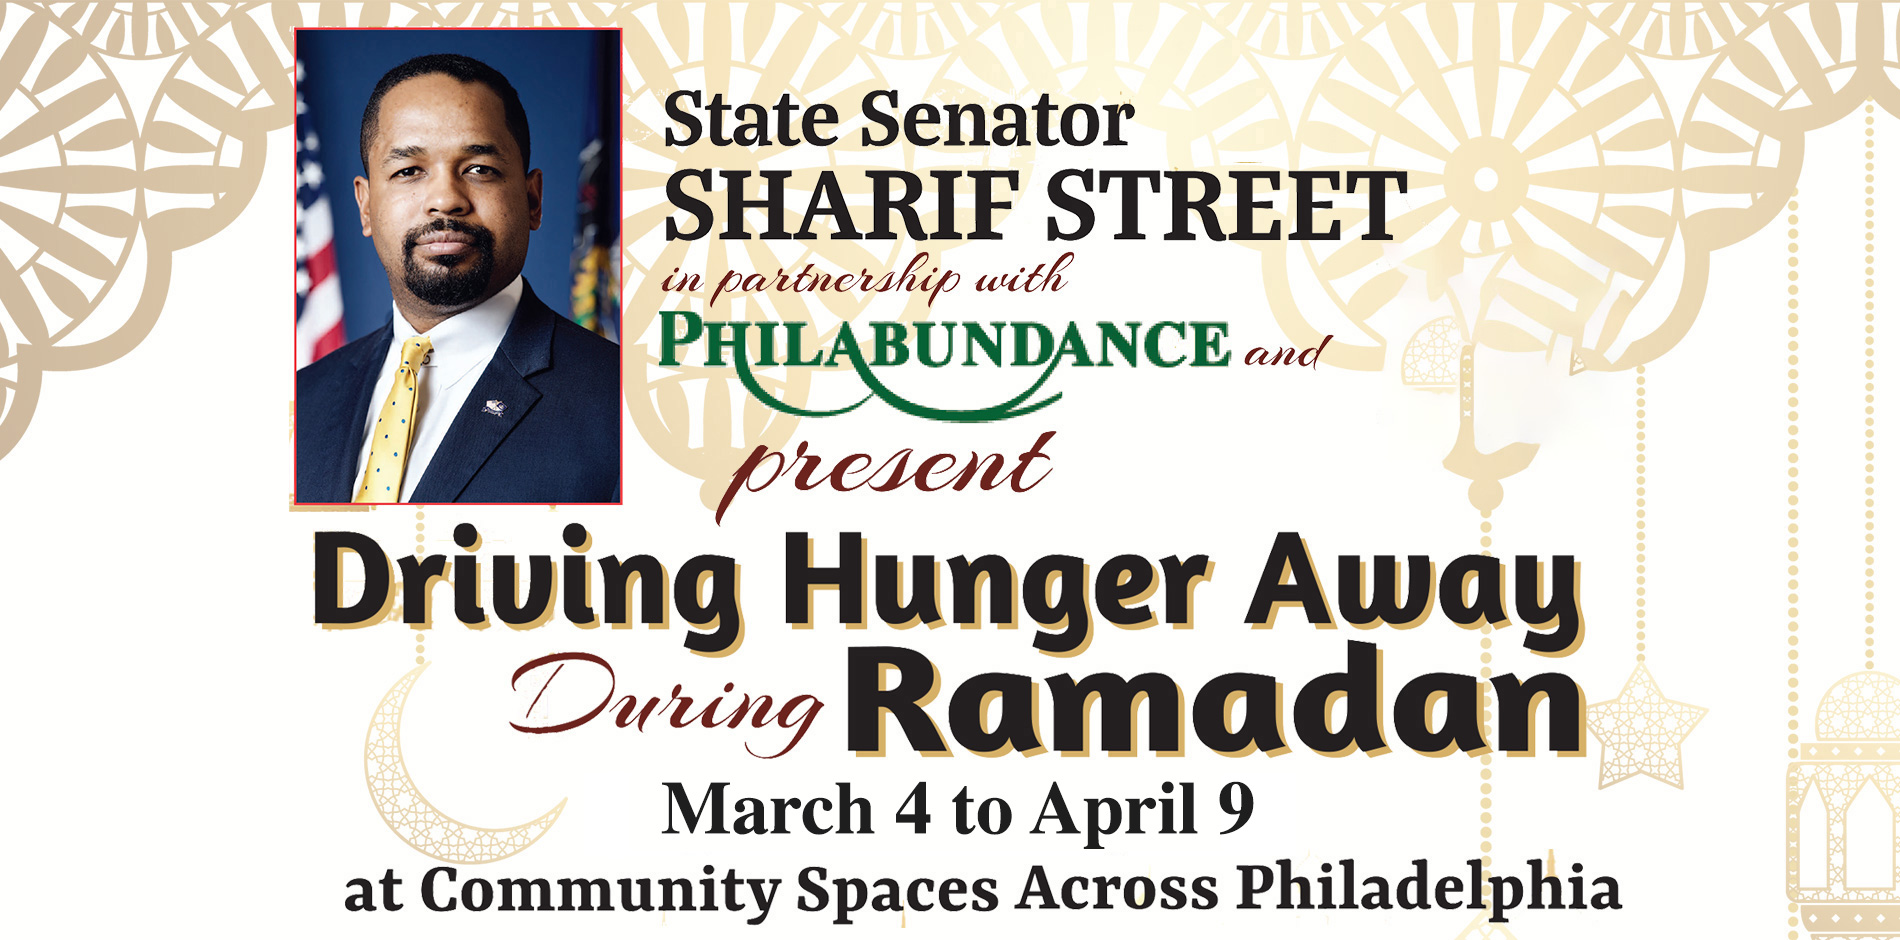 Driving Hunger Away During Ramadan